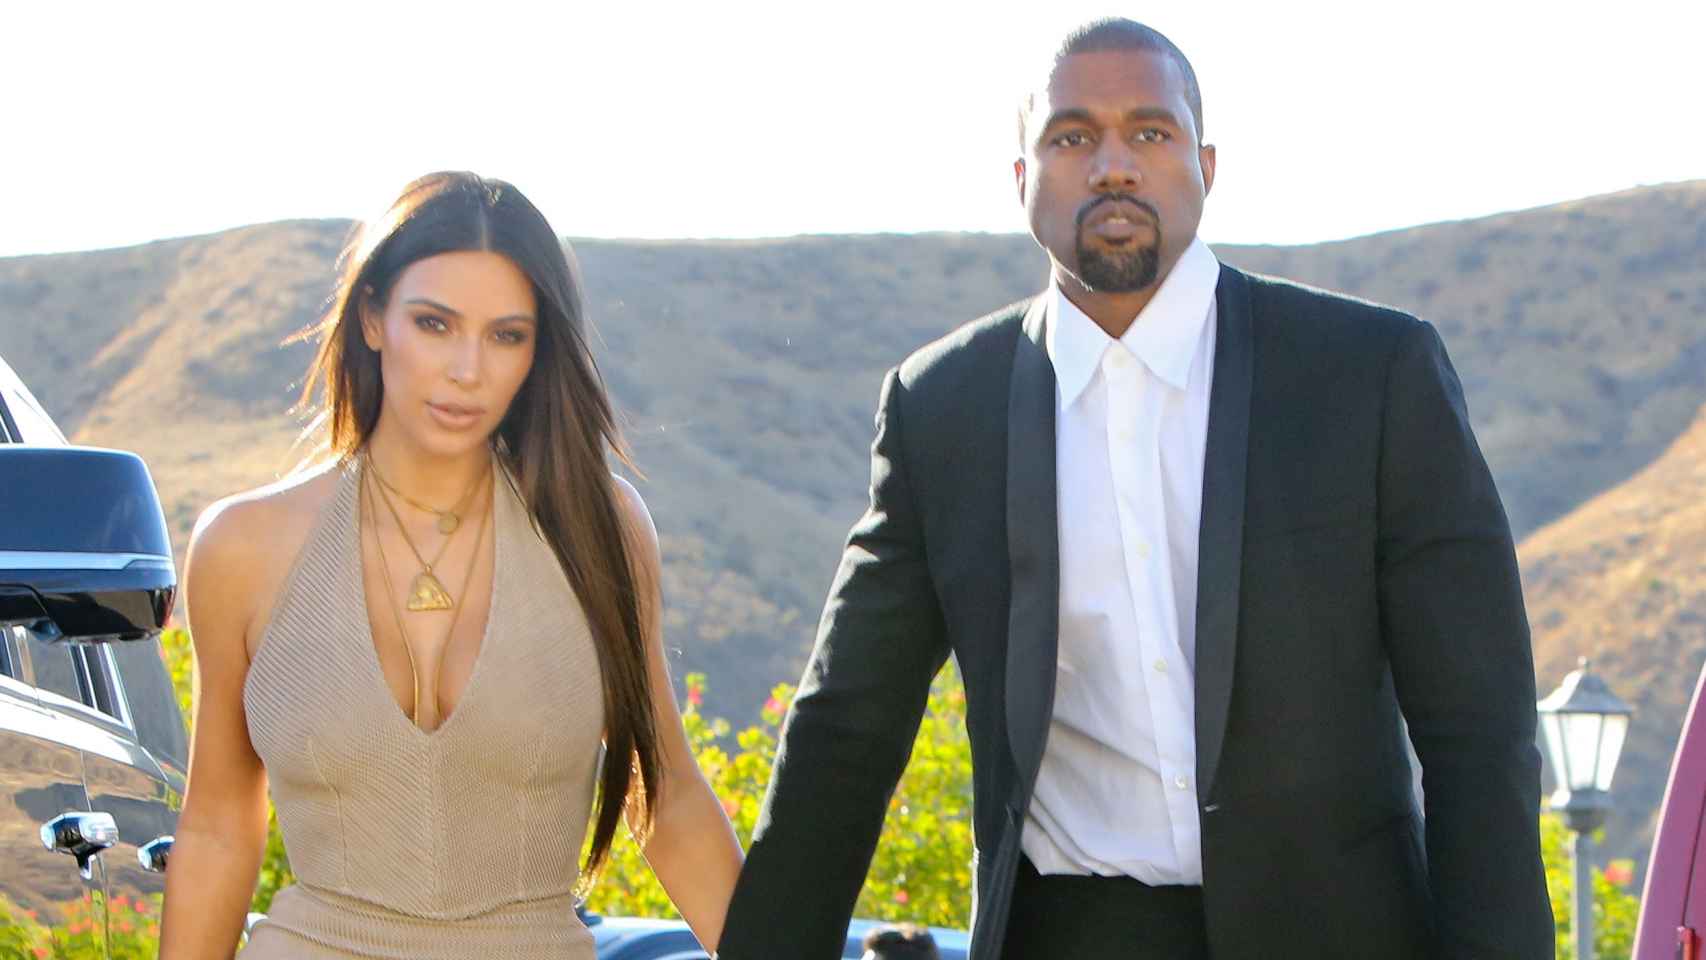 El matrimonio formado por Kim Kardashian y Kanye West.